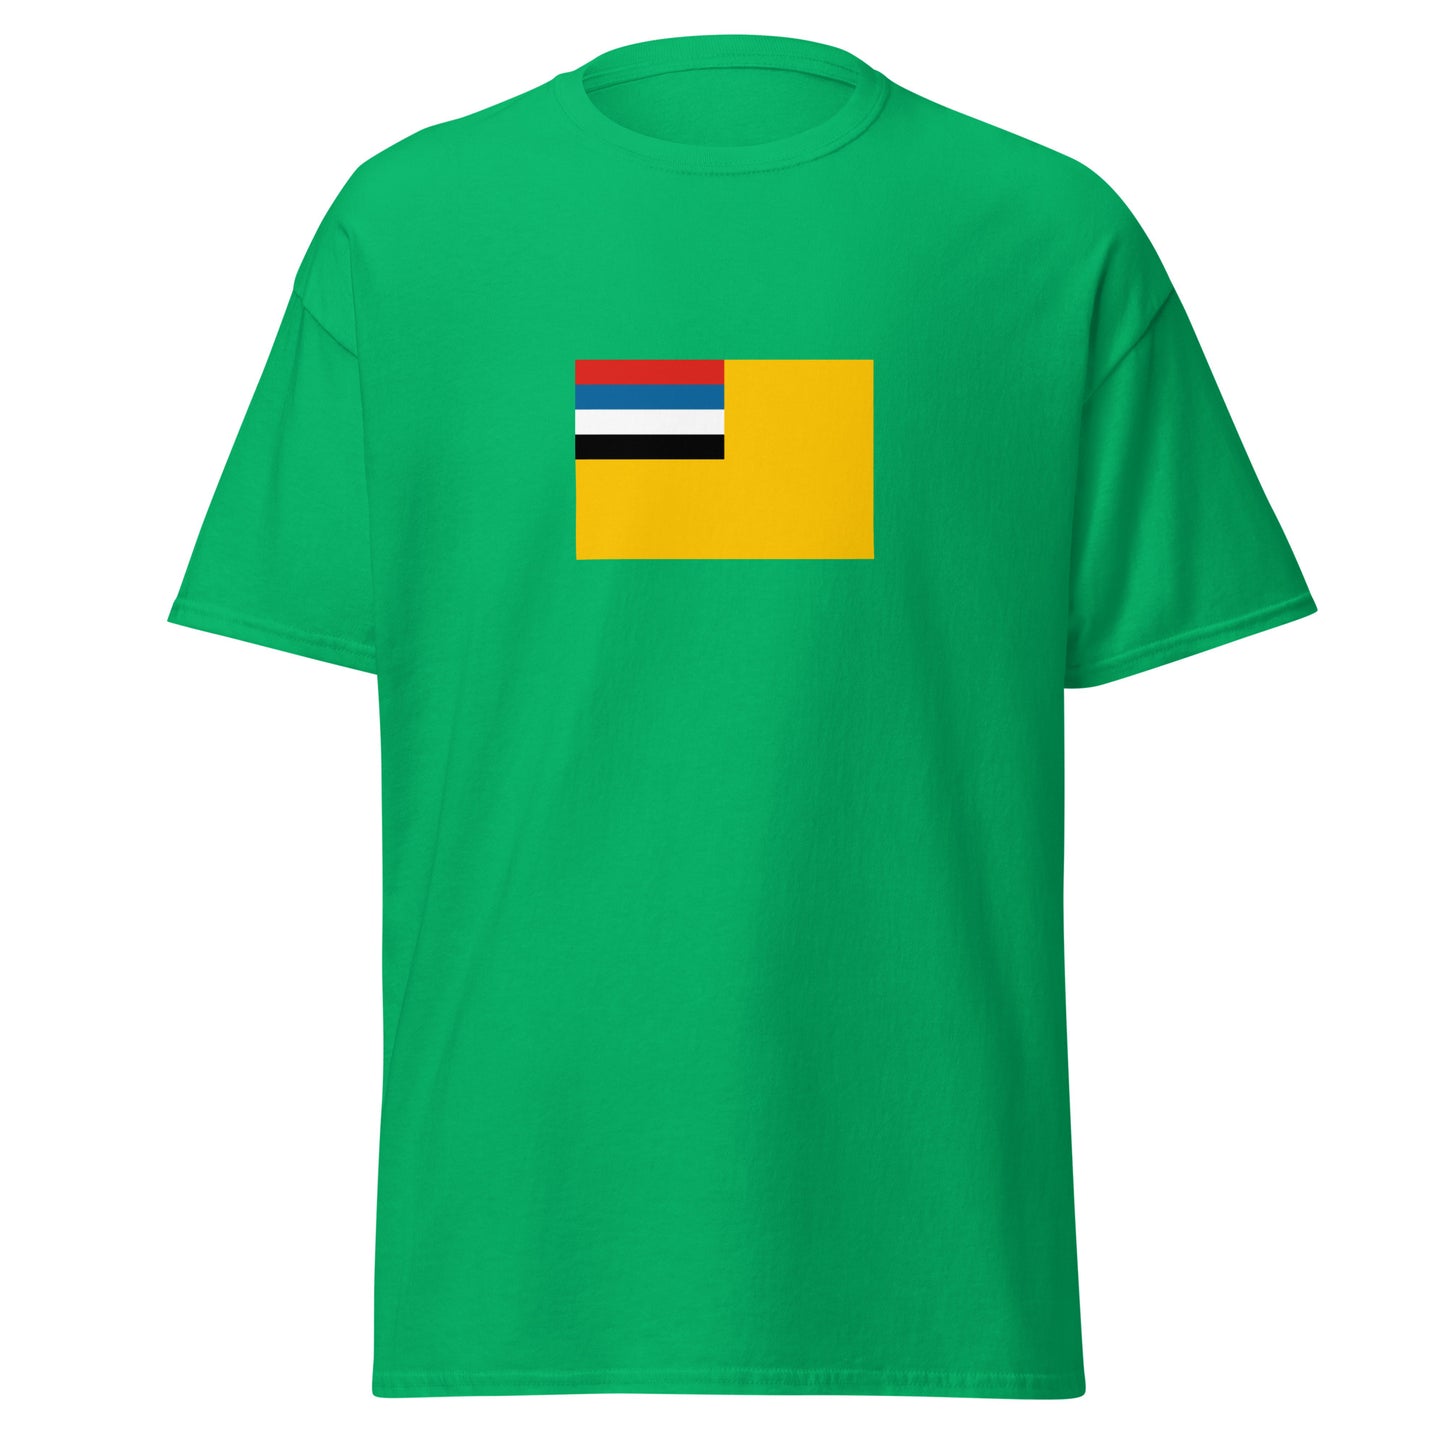 Manchu people | Ethnic China Flag Interactive T-shirt